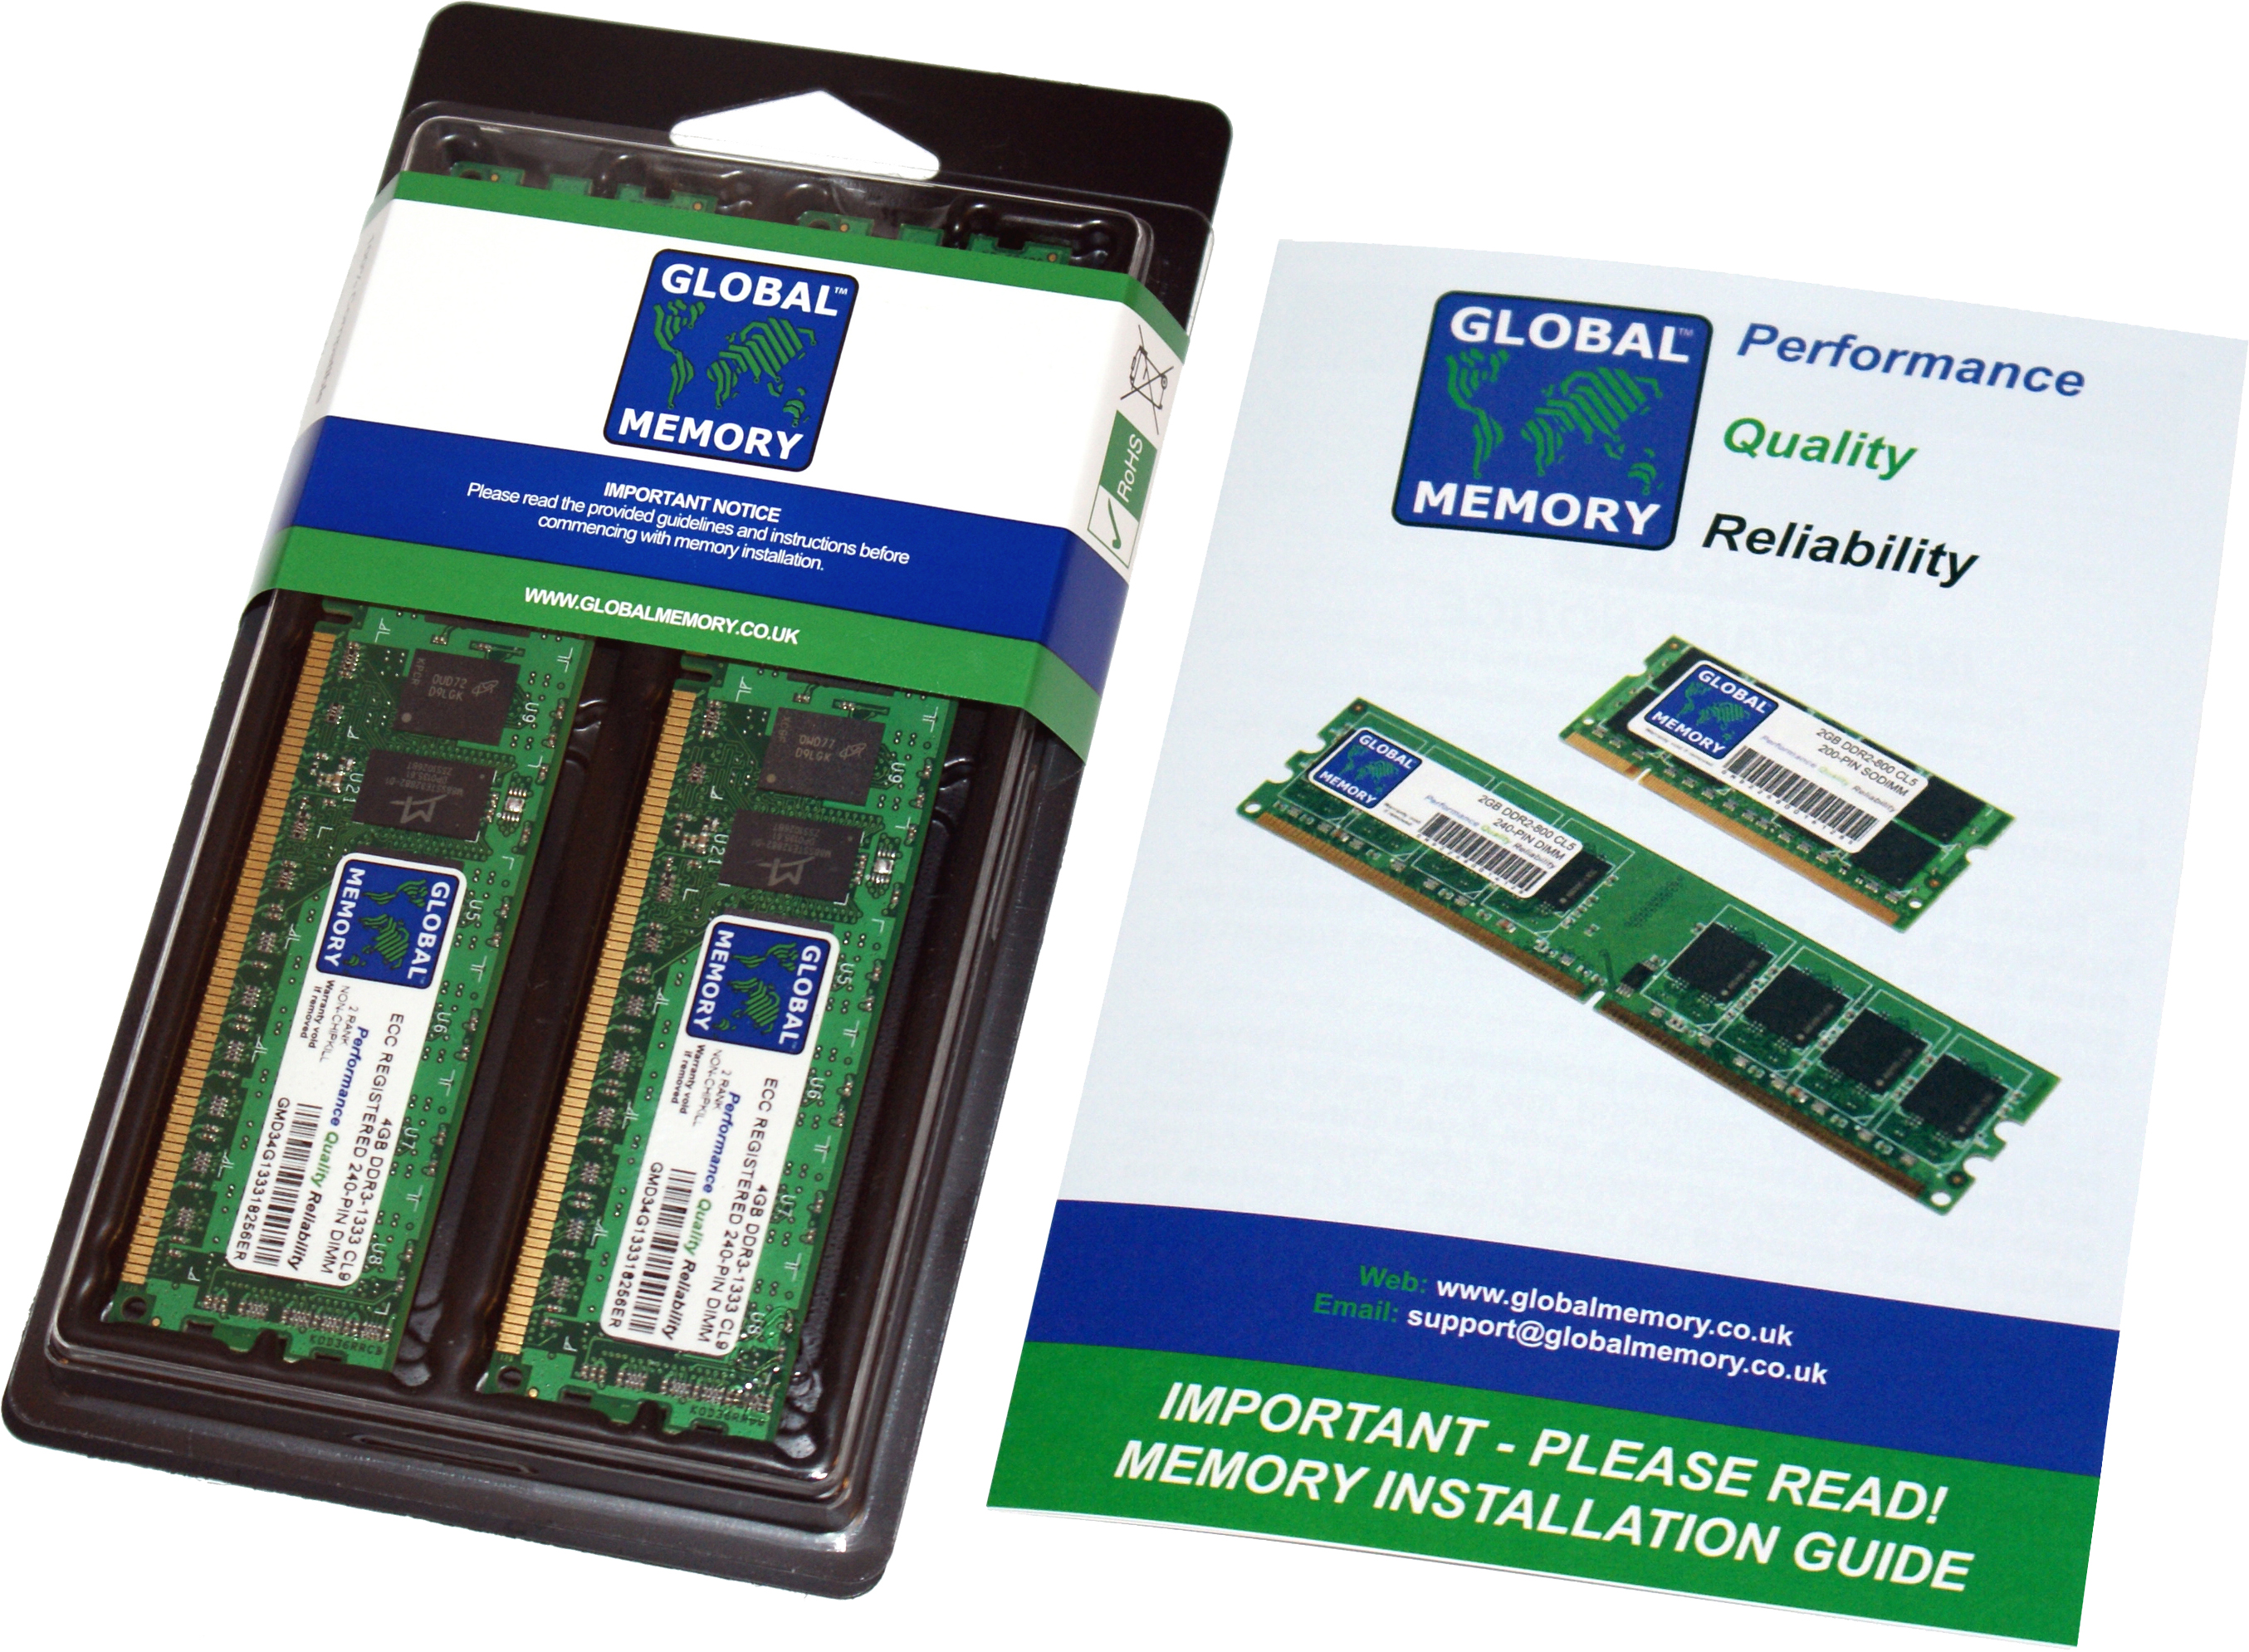 32GB (2 x 16GB) DDR4 2666MHz PC4-21300 288-PIN ECC REGISTERED DIMM (RDIMM) MEMORY RAM KIT FOR FUJITSU SERVERS/WORKSTATIONS (4 RANK KIT CHIPKILL)